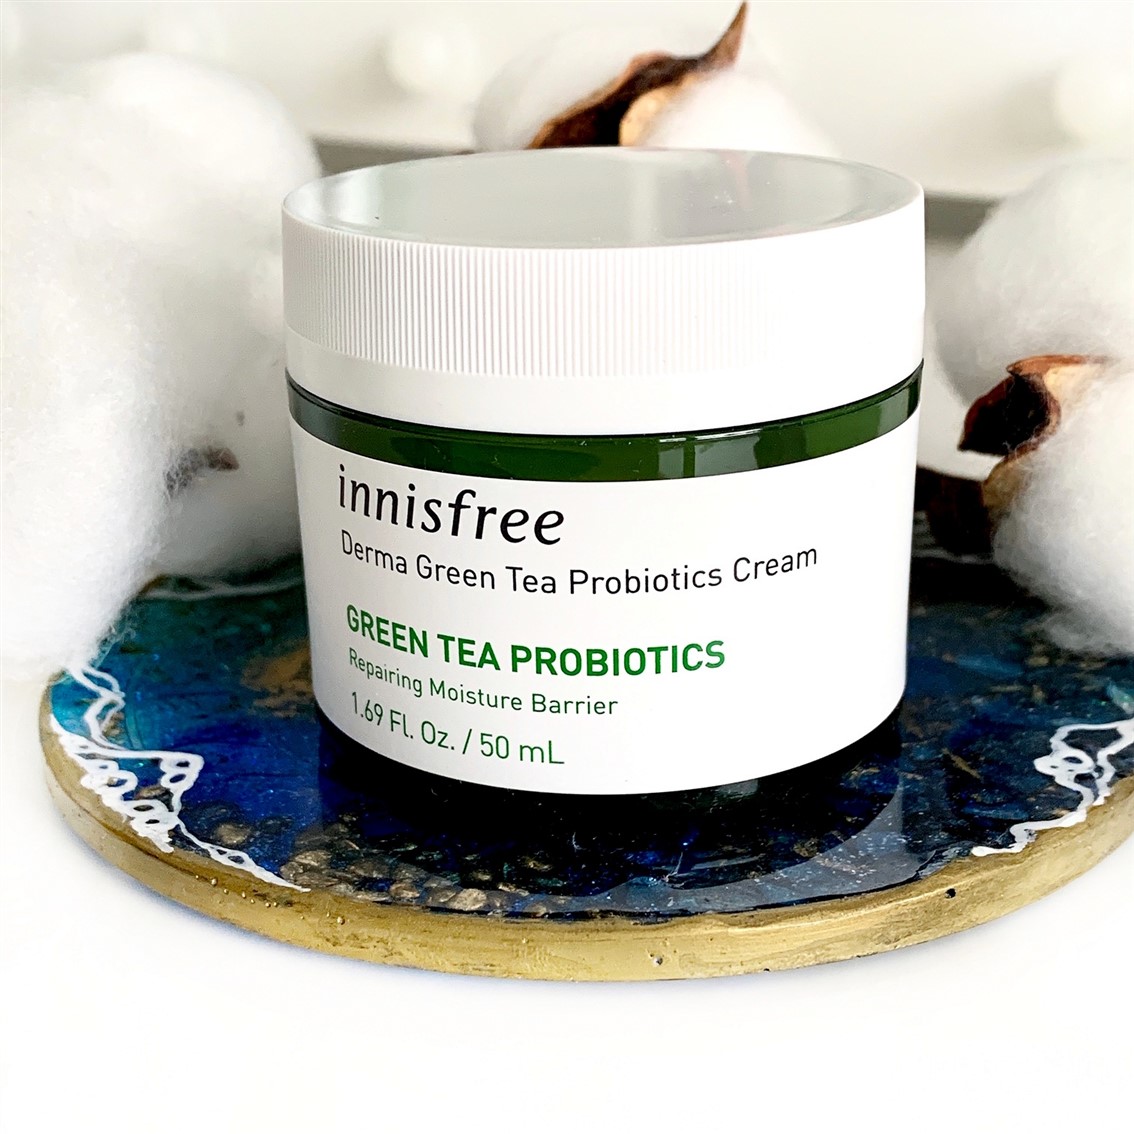 Innisfree Derma Green Tea Probiotics Cream